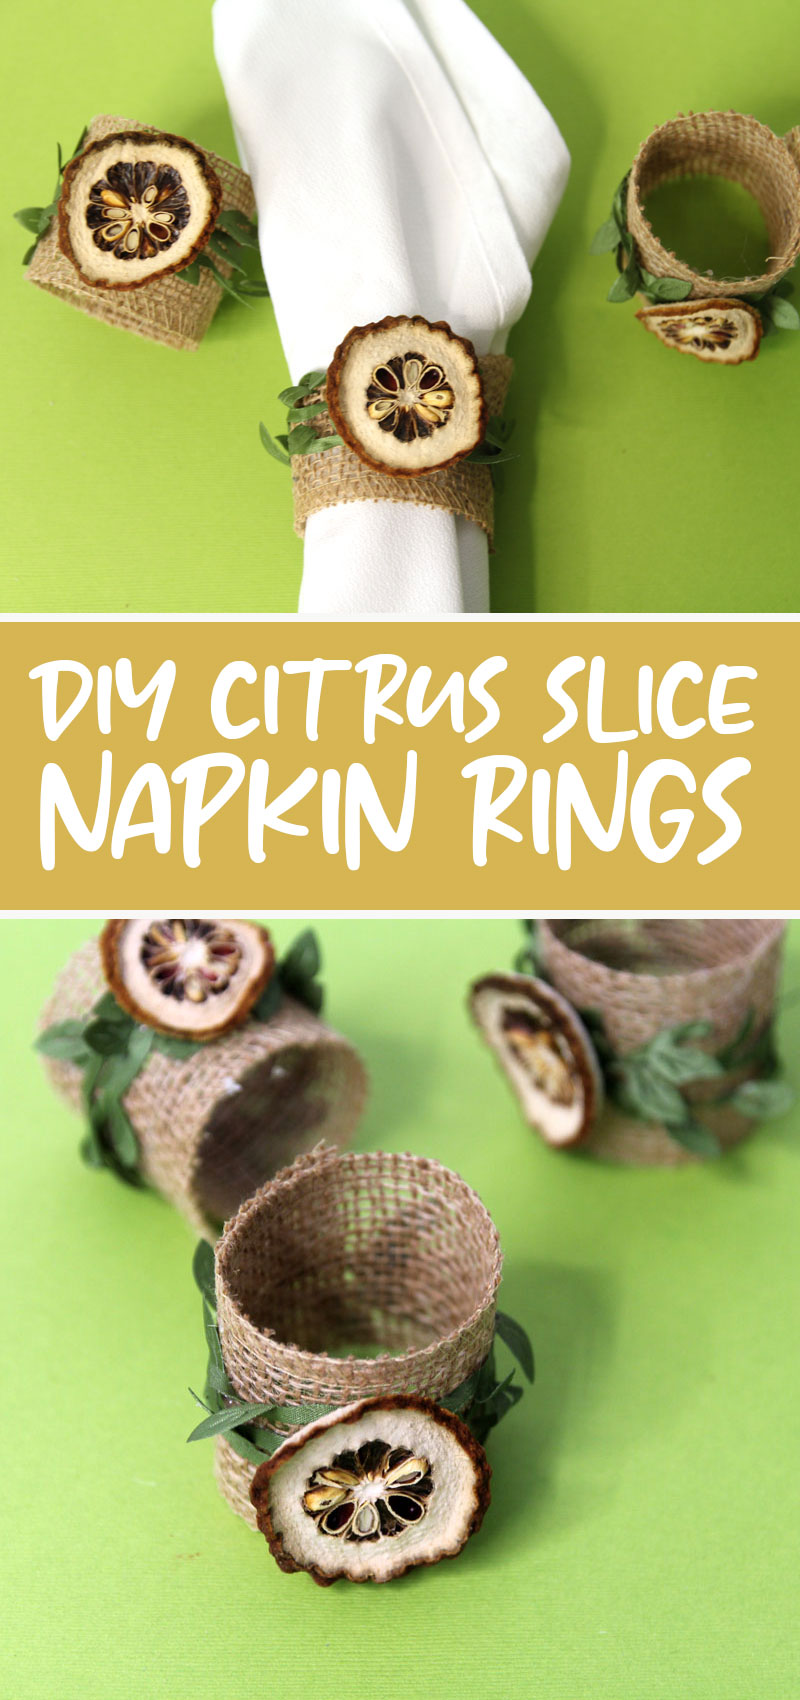 Sukkot Napkin Rings from Dried Etrog!